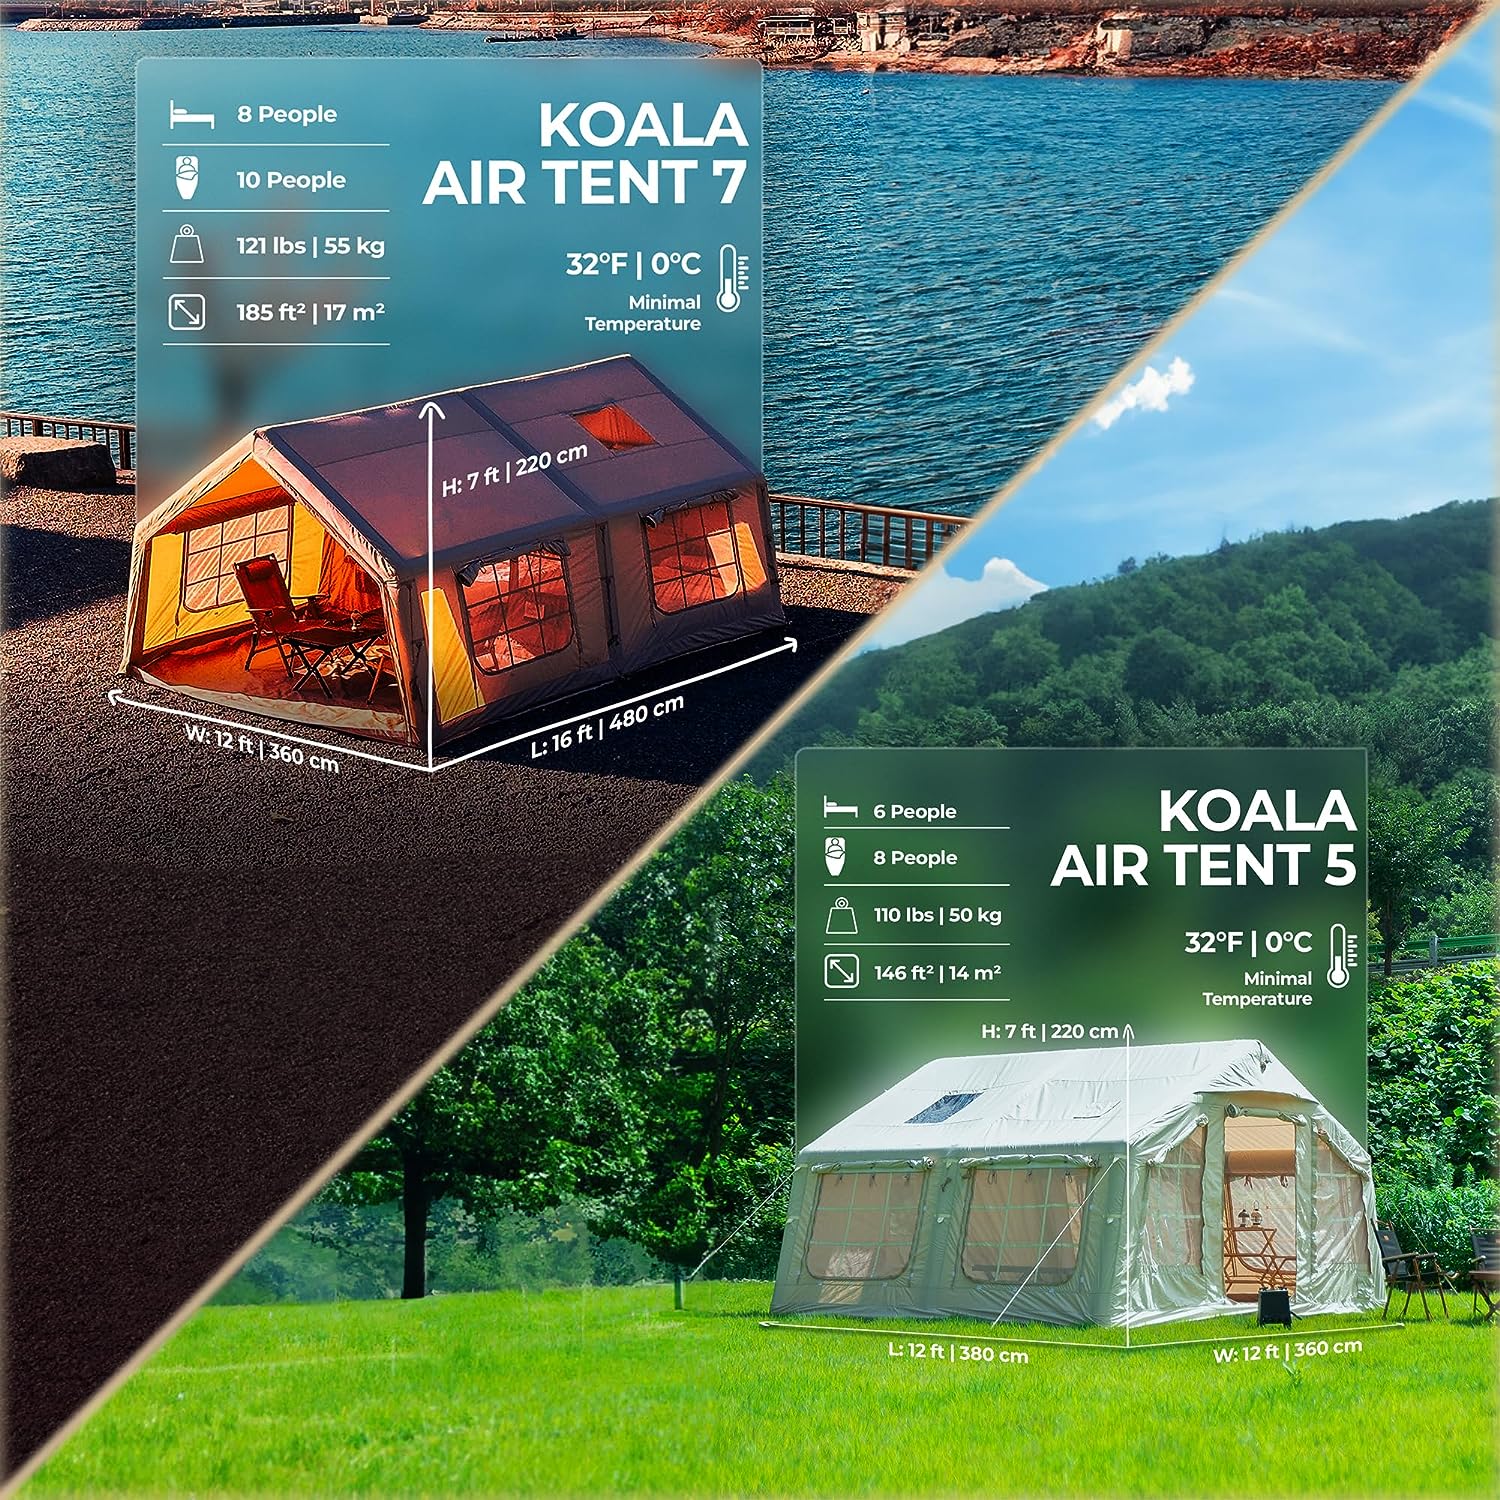 Koala Air Tent 7 - Premium Inflatable Tent by RBM Outdoors – Big